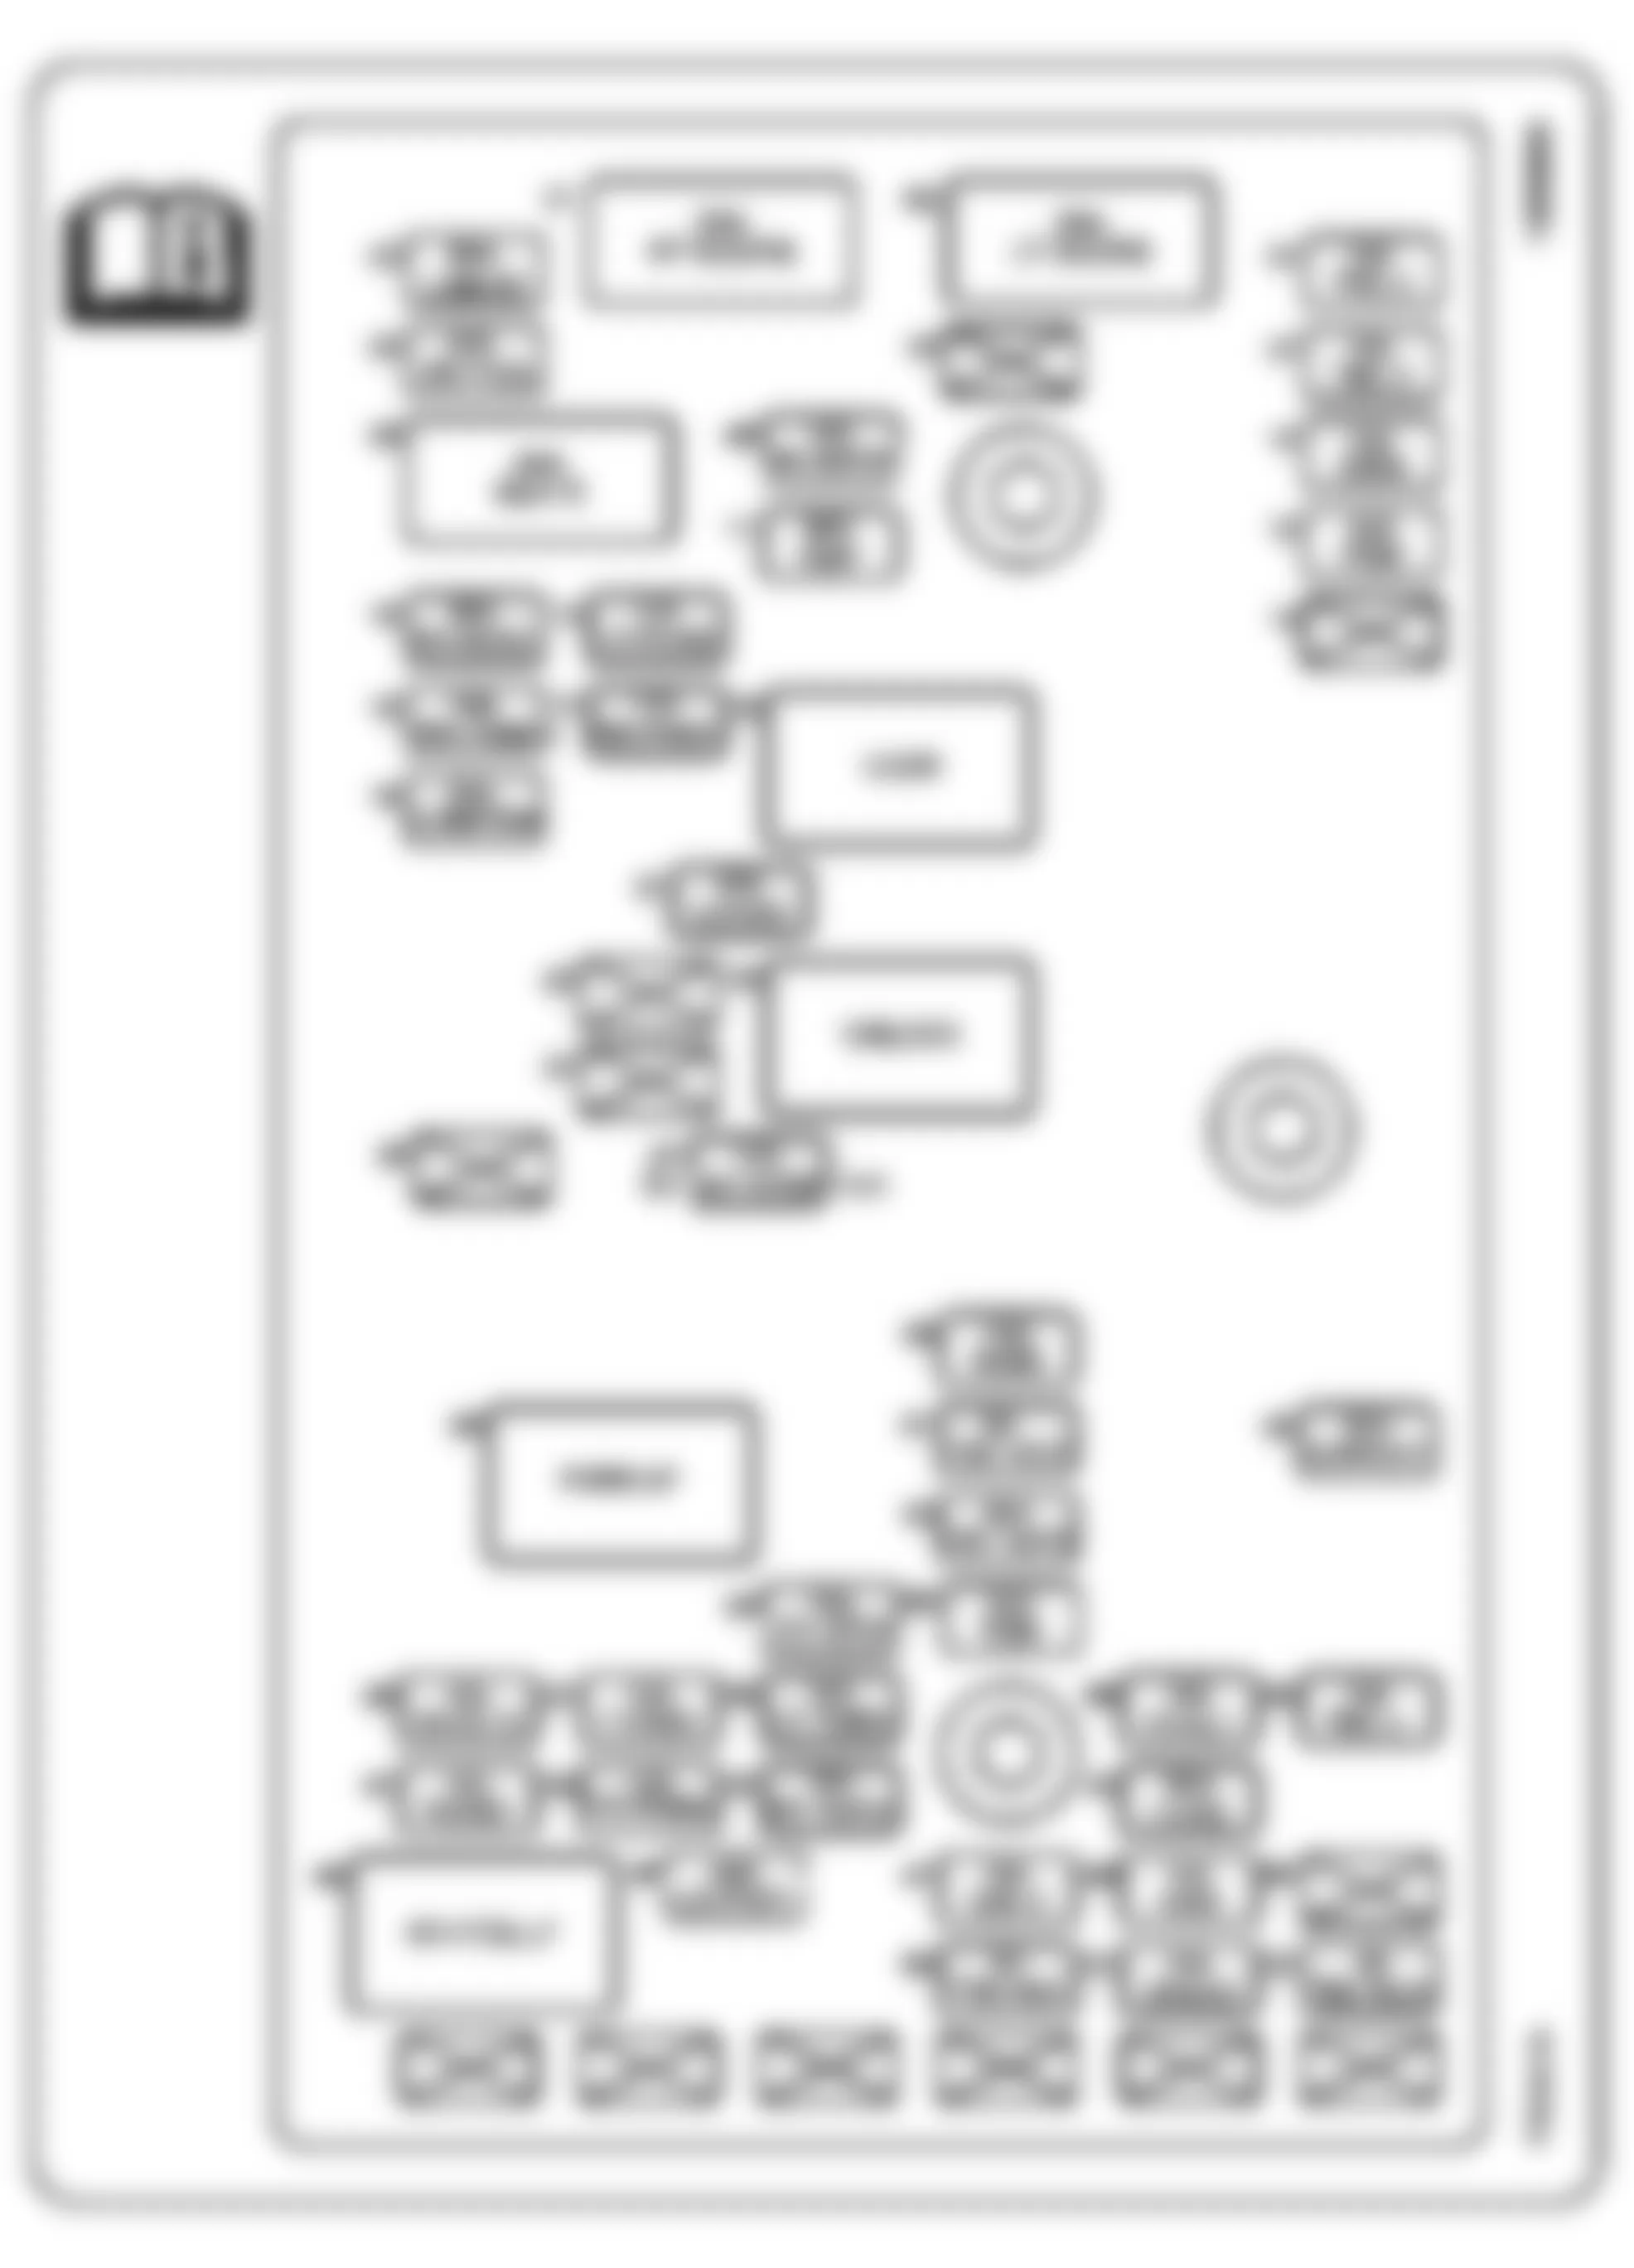 Isuzu Ascender S 2006 - Component Locations -  Identifying Rear Fuse Block Components (Short Wheelbase)